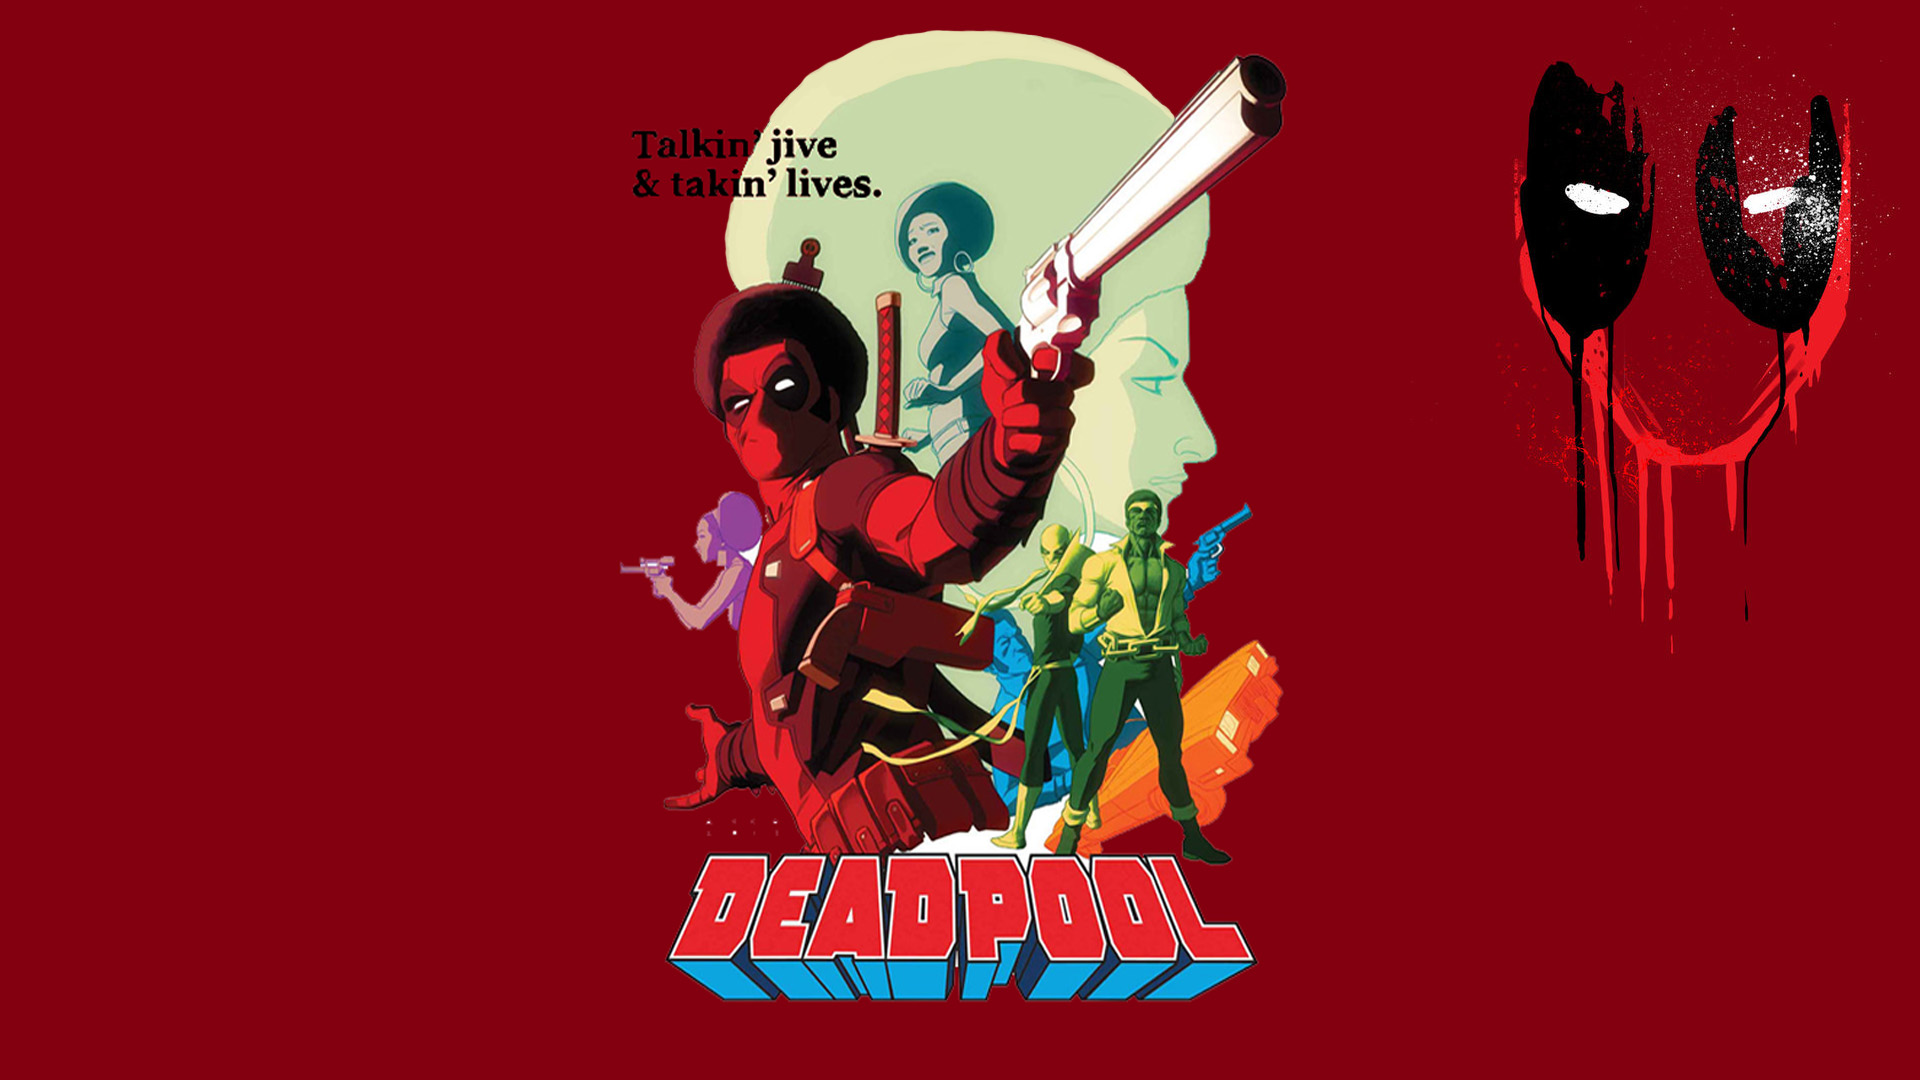 made that awesome Deadpool cover into a wallpaper iimgurcom